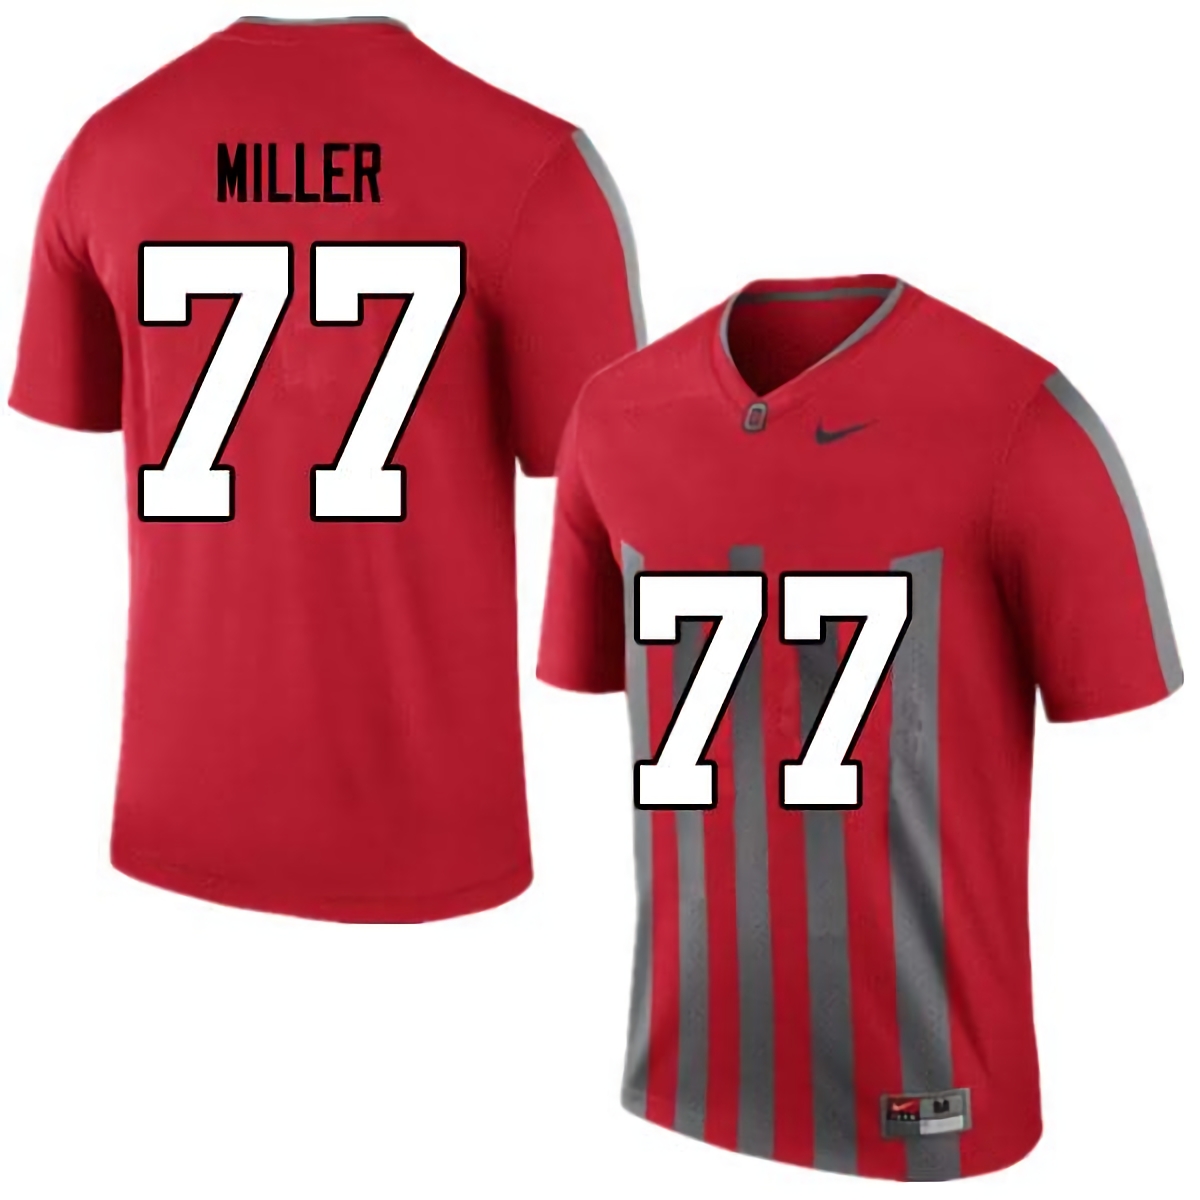 Harry Miller Ohio State Buckeyes Men's NCAA #77 Nike Retro College Stitched Football Jersey JOI4356MK